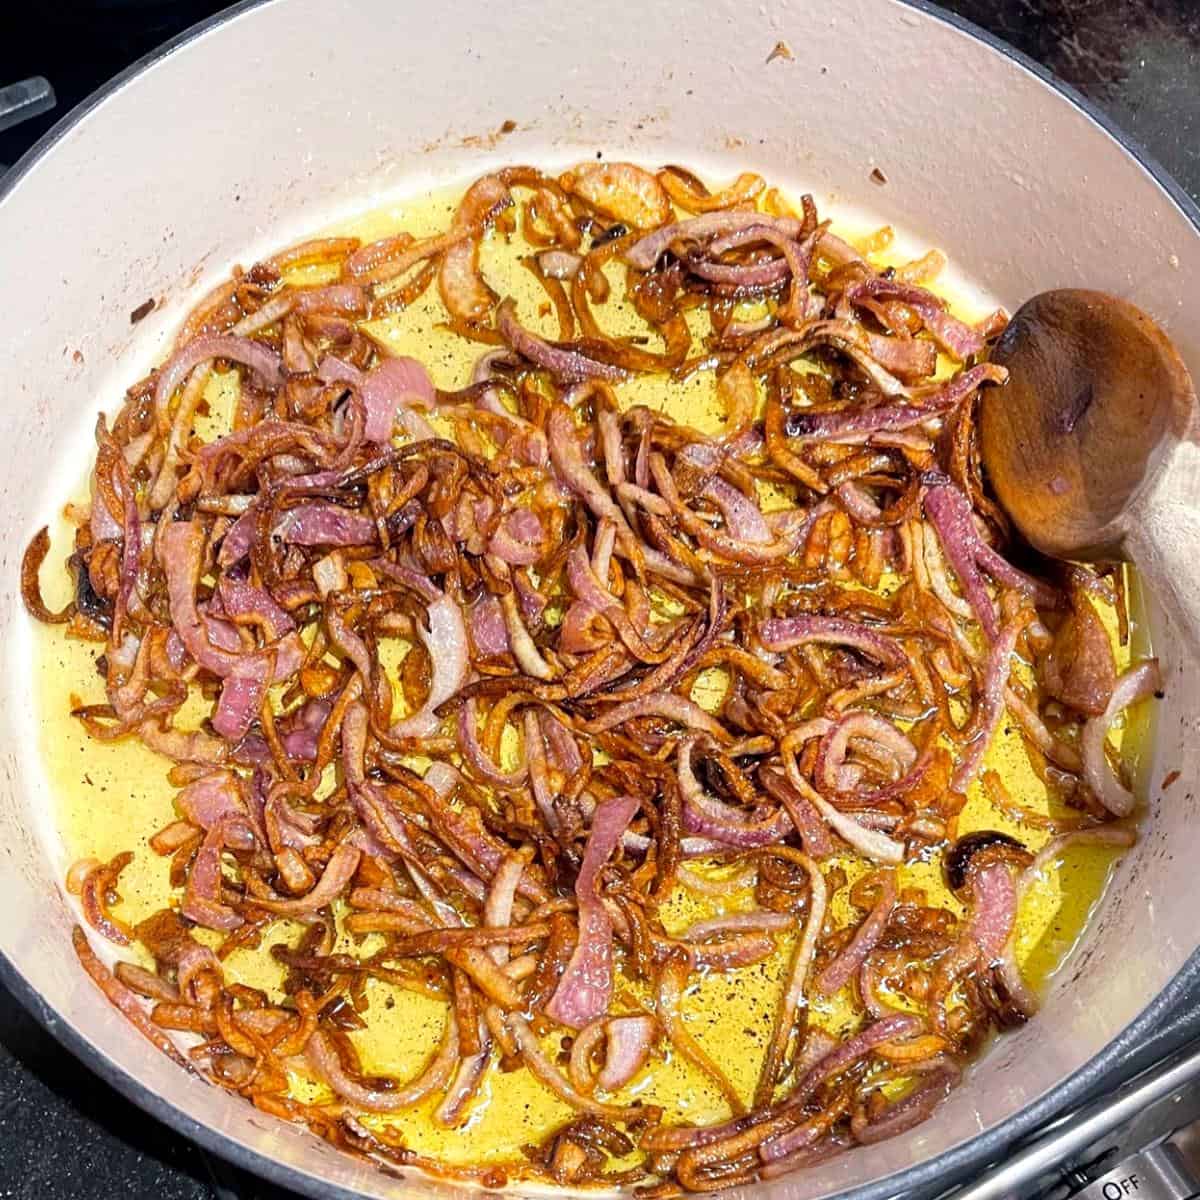 Onions caramelized for mujaddara.